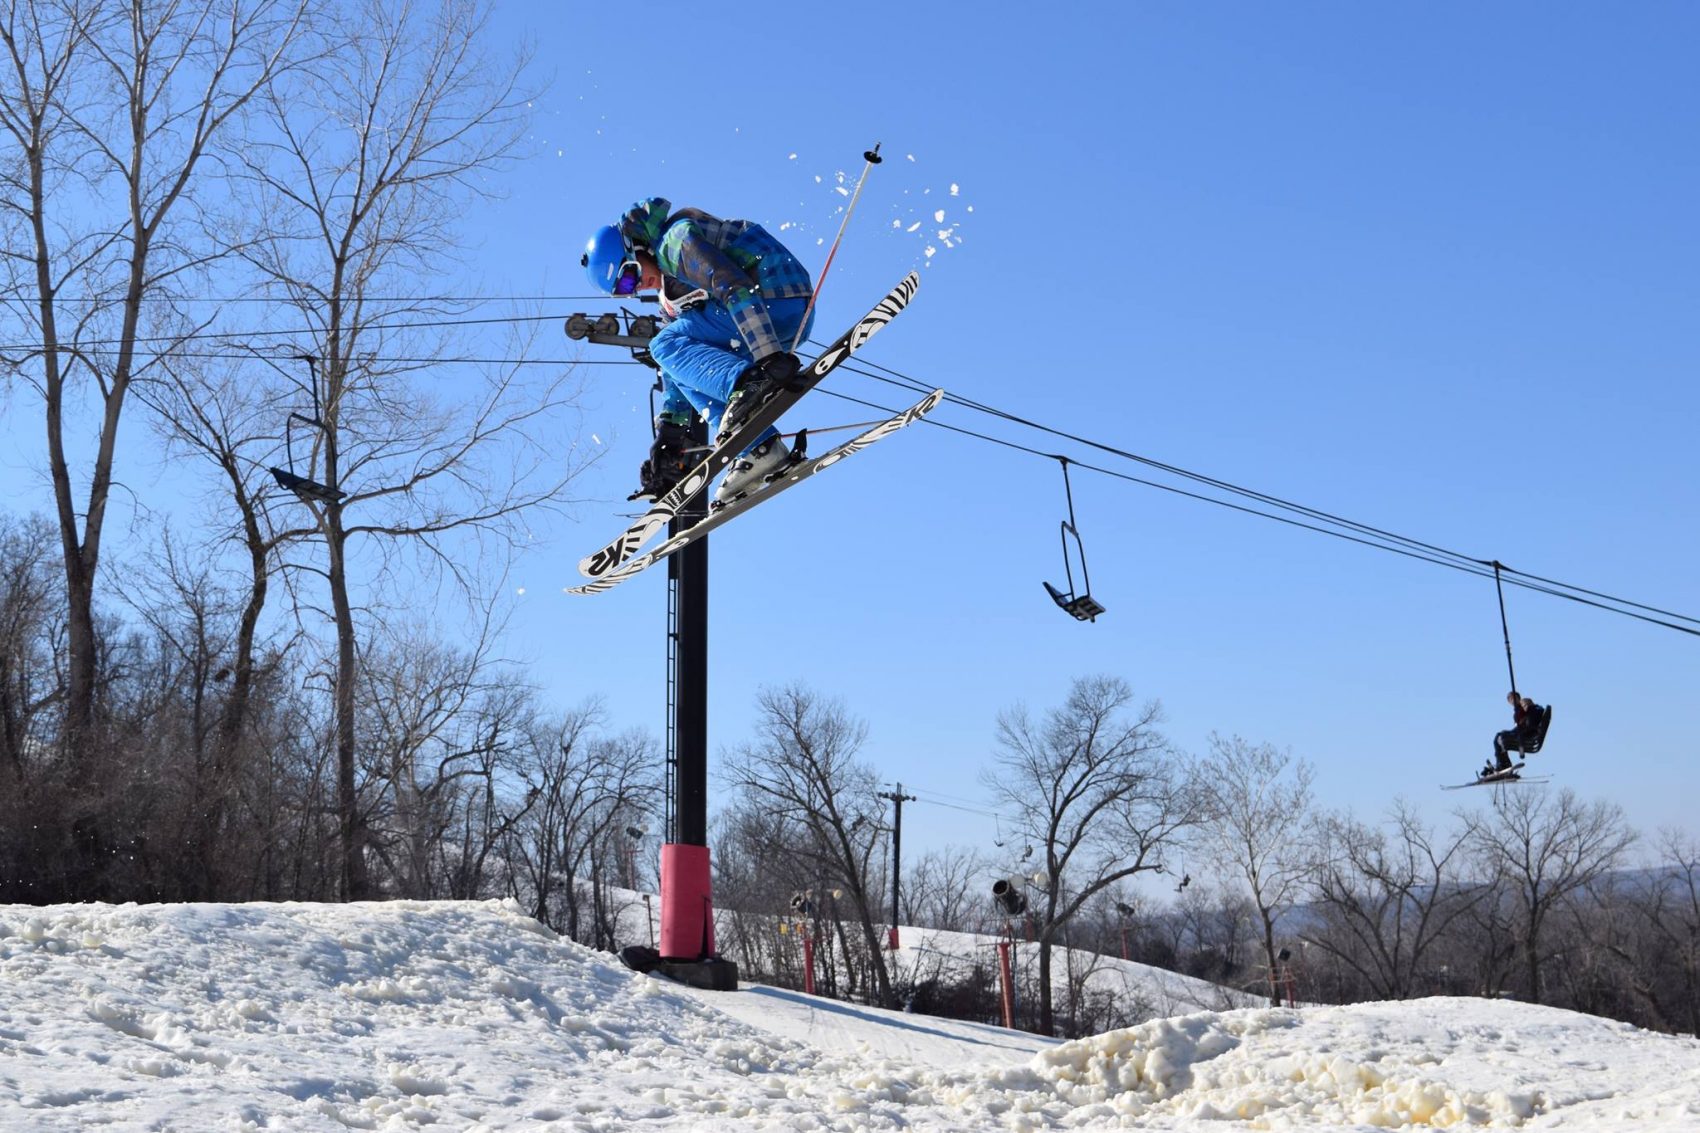 Skier jumping, snow creek, Missouri